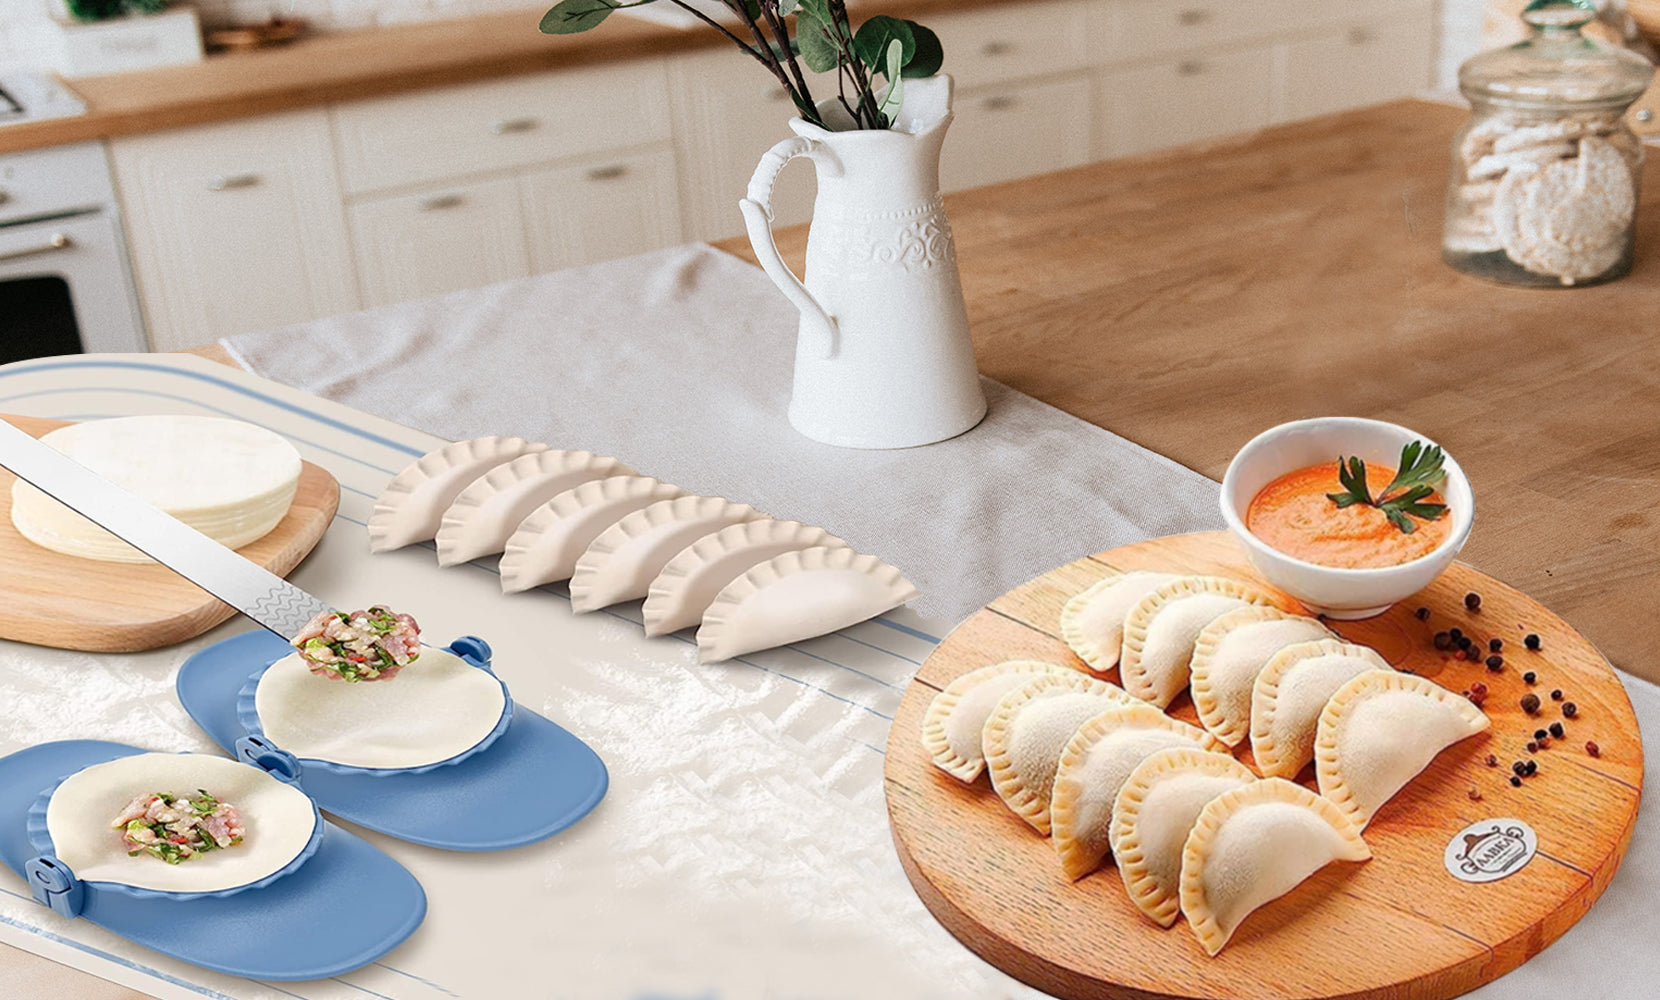 Set of 3: Perfect Dumpling Ravioli Empanadas Pie Pastry Maker Mold Dough Press